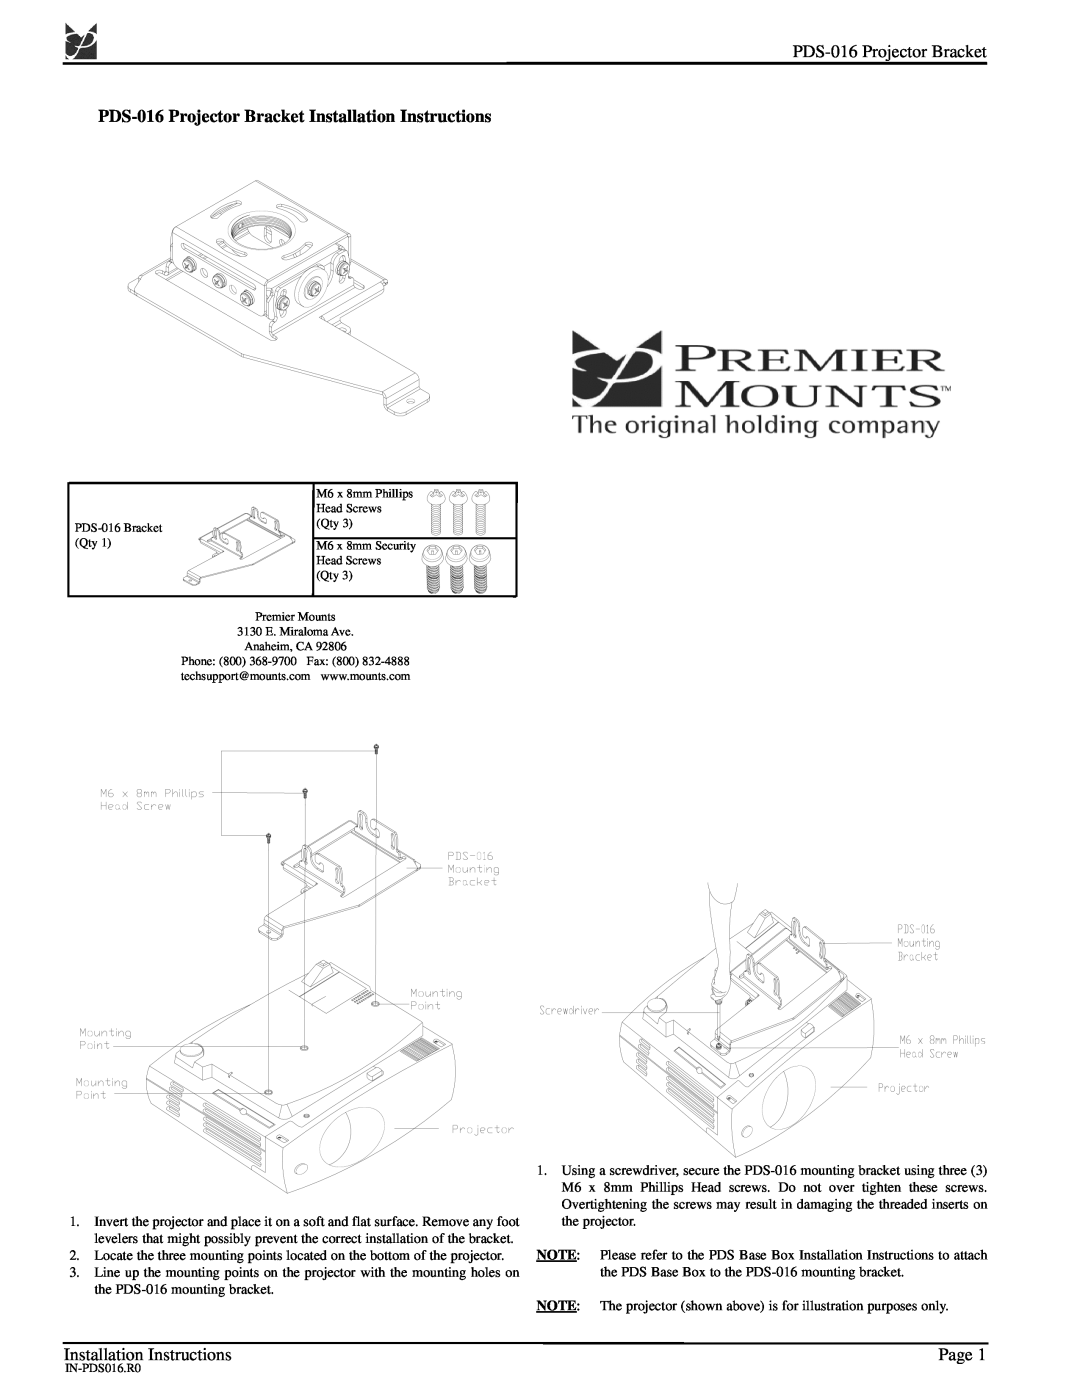 Premier Mounts installation instructions PDS-016Projector Bracket, Installation Instructions, Page 